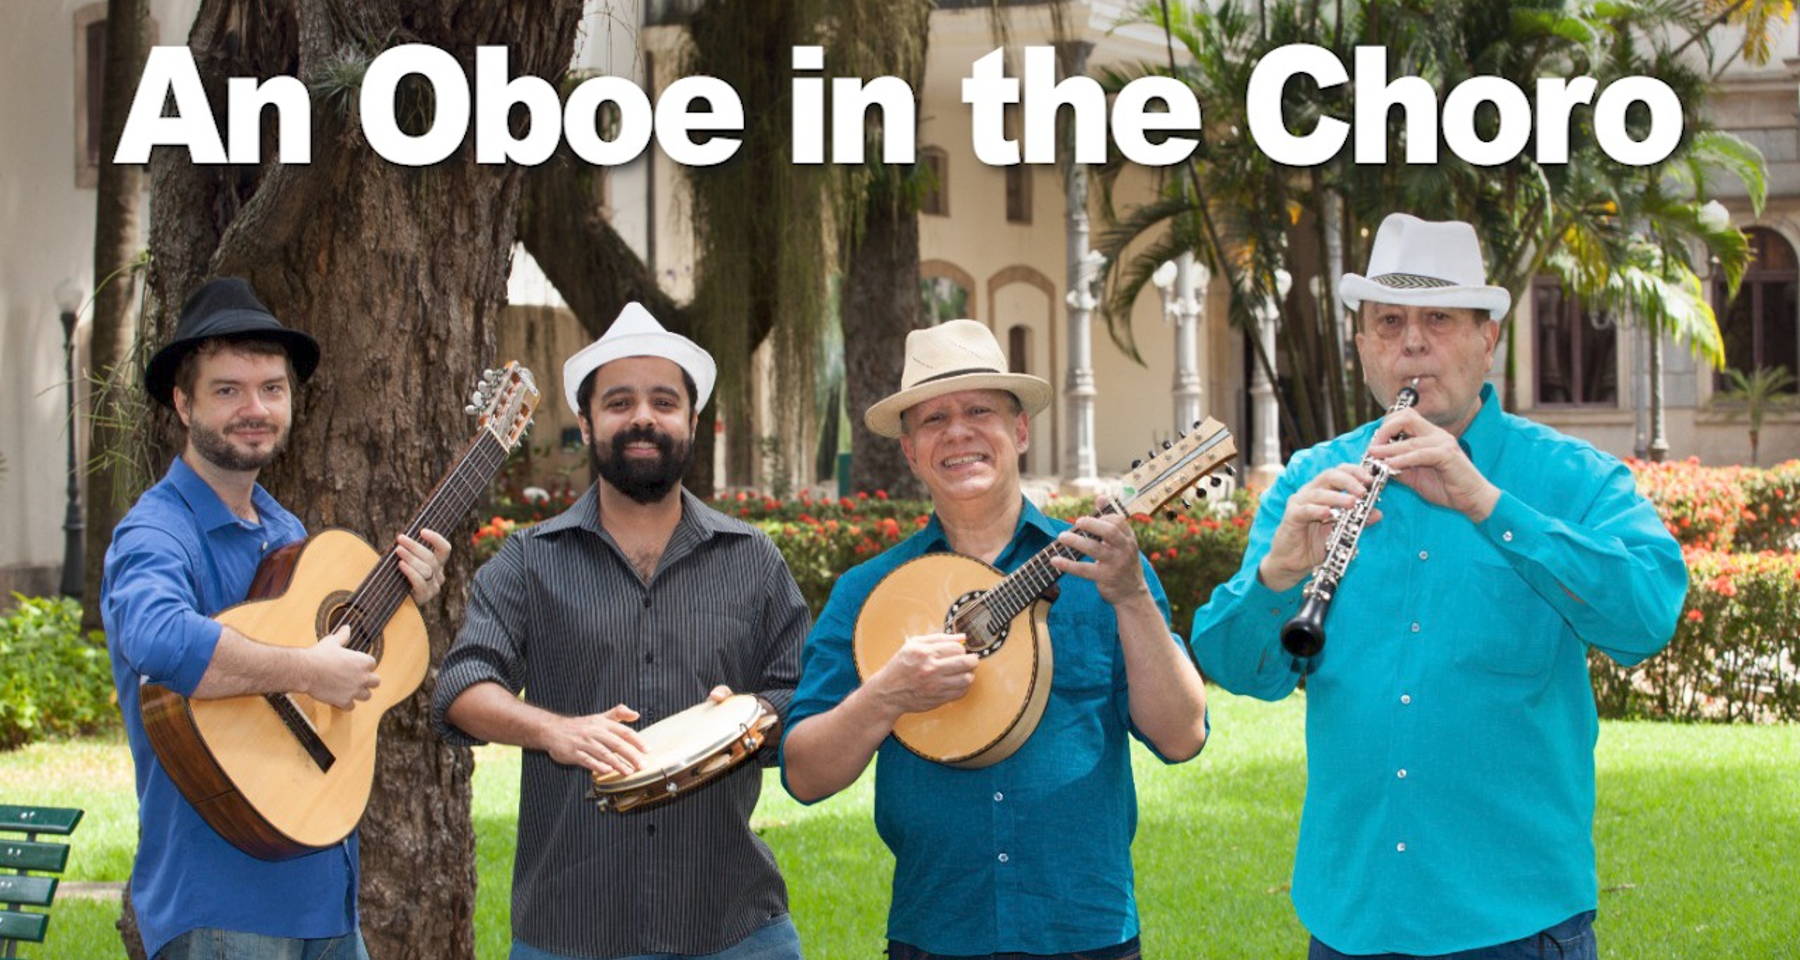 An Oboe in the Choro - Rio Winds Festival 2021